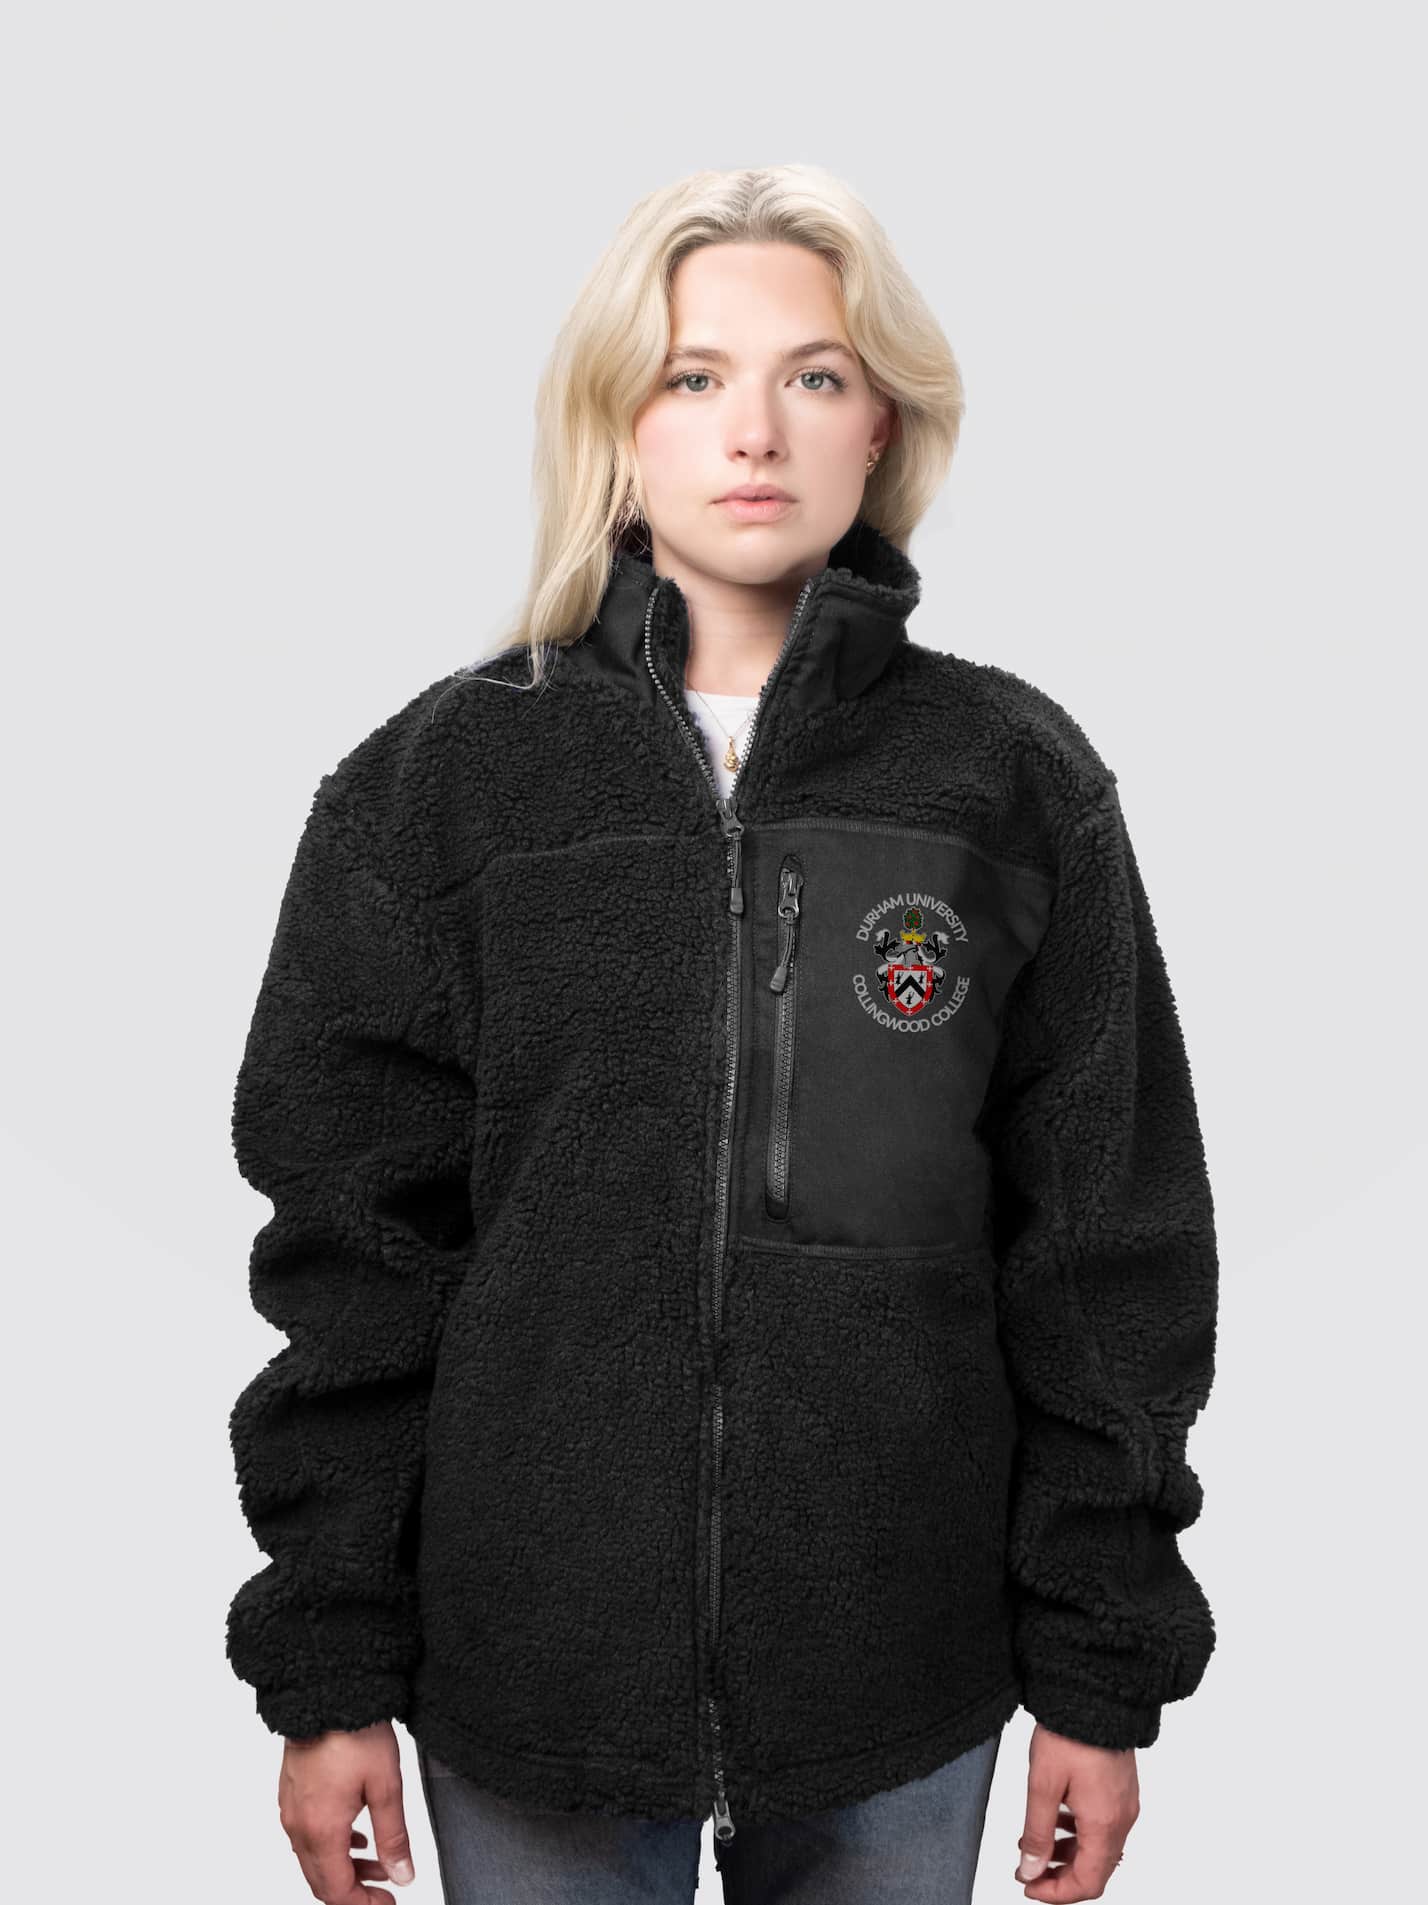 Collingwood College Durham Unisex Fluffy Sherpa Fleece Jacket